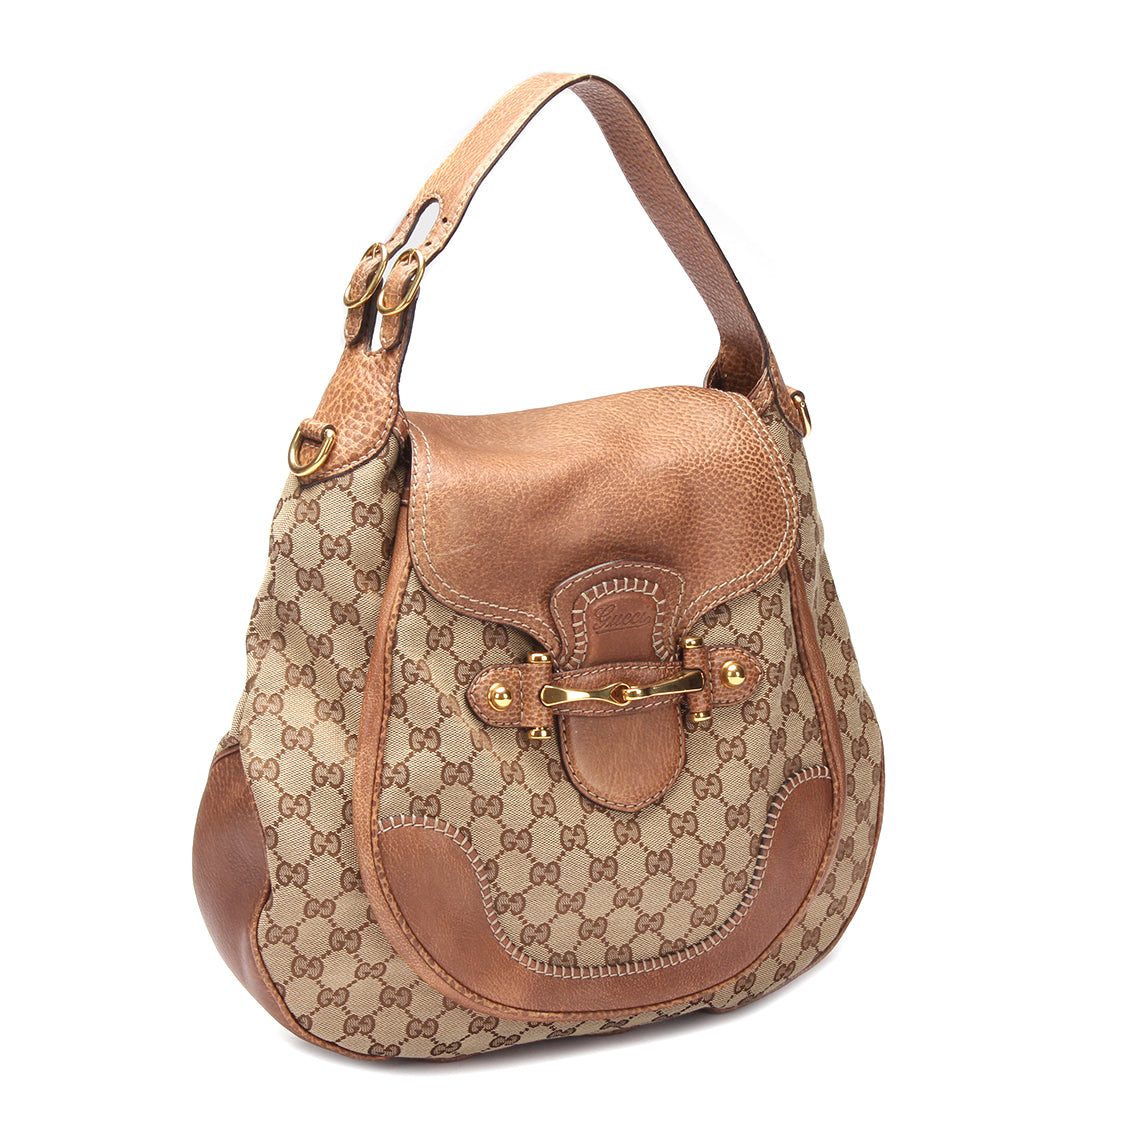 Gucci GG Canvas & Leather Pelham Hobo Canvas Handbag in Good condition